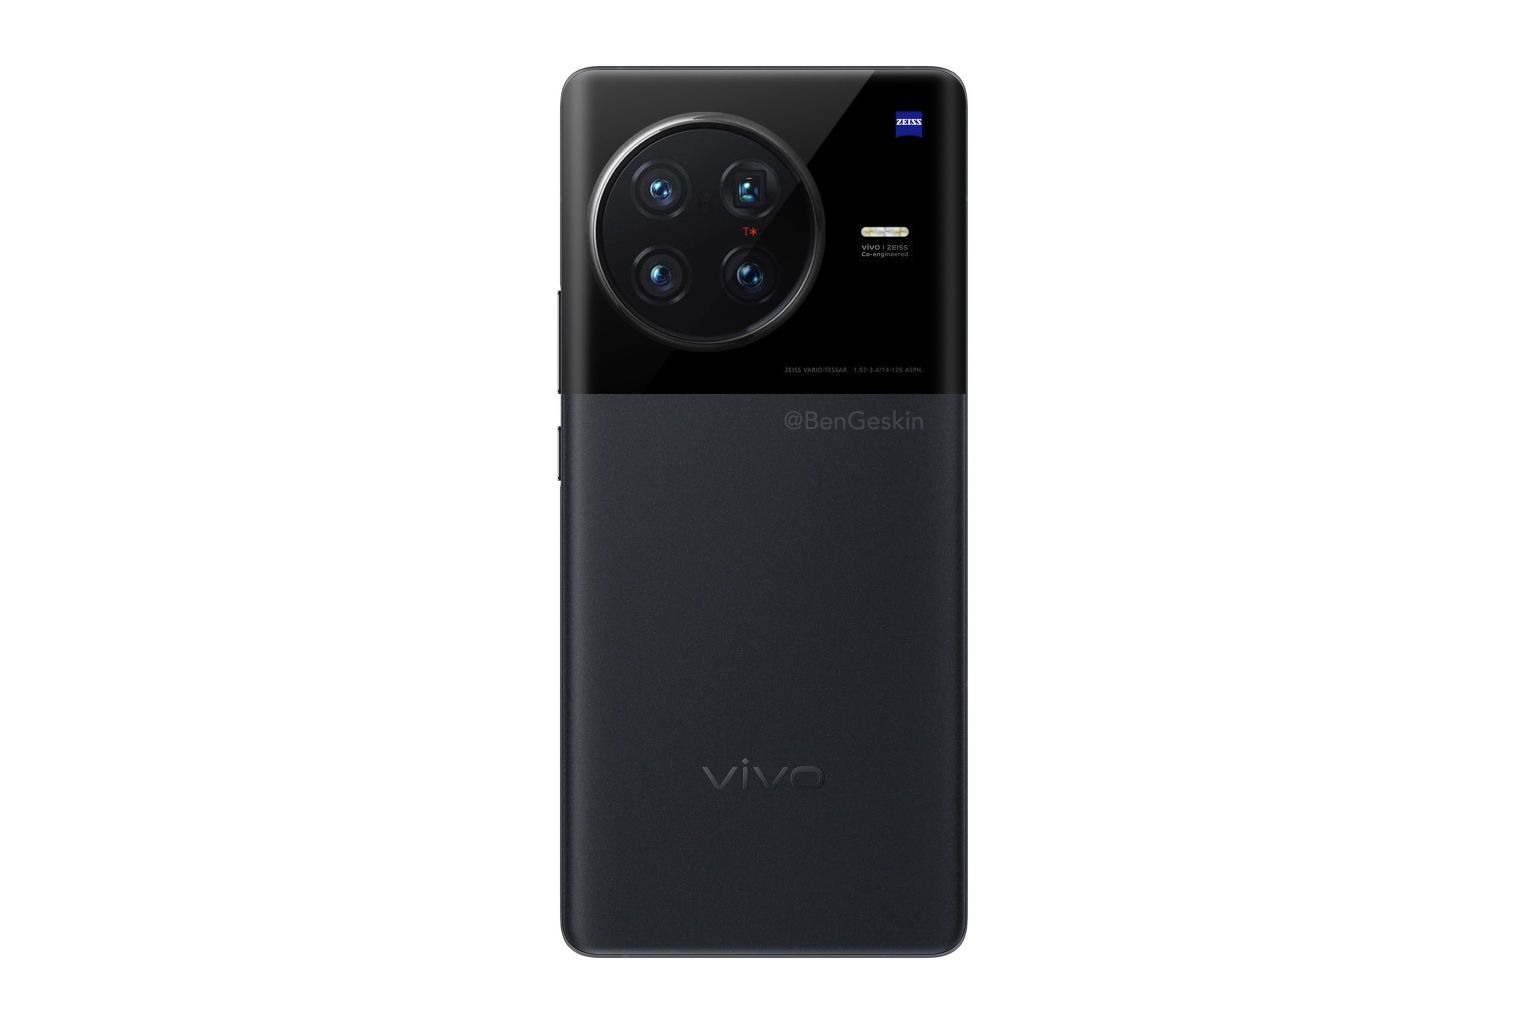 Vivo X90 Pro Plus render created by Ben Geskin